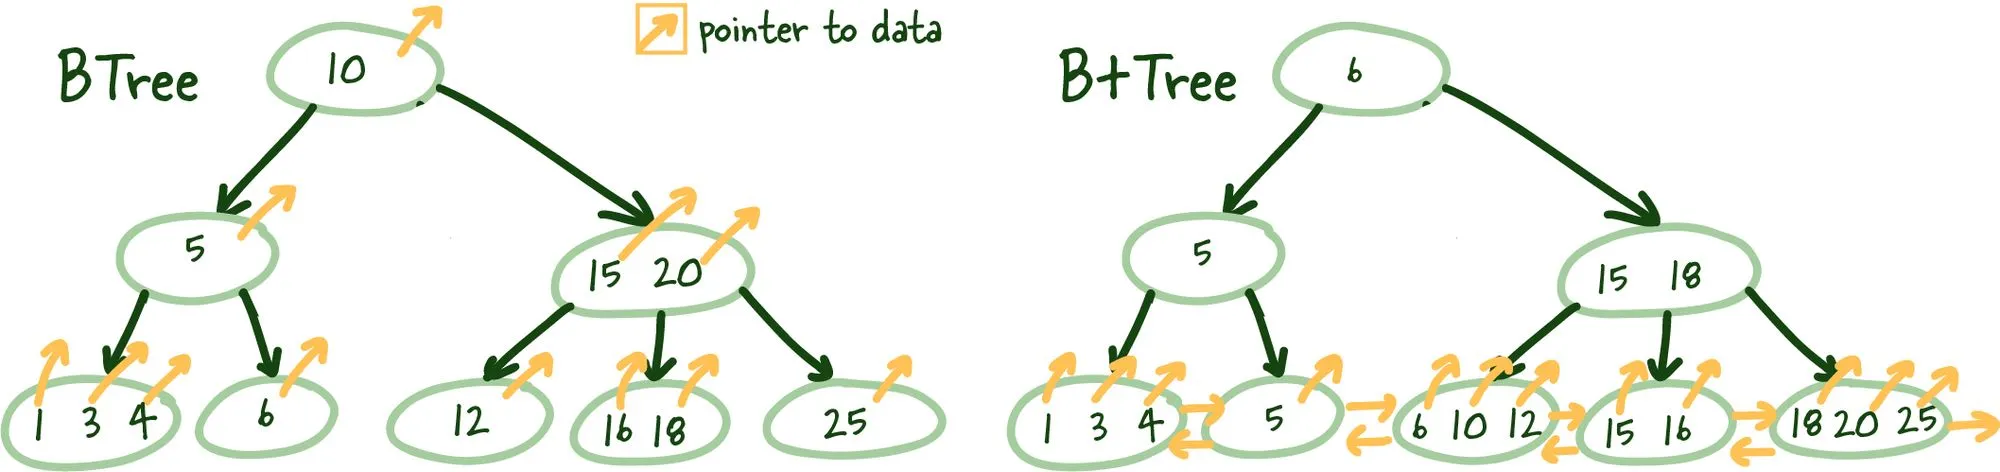 B and B+ tree